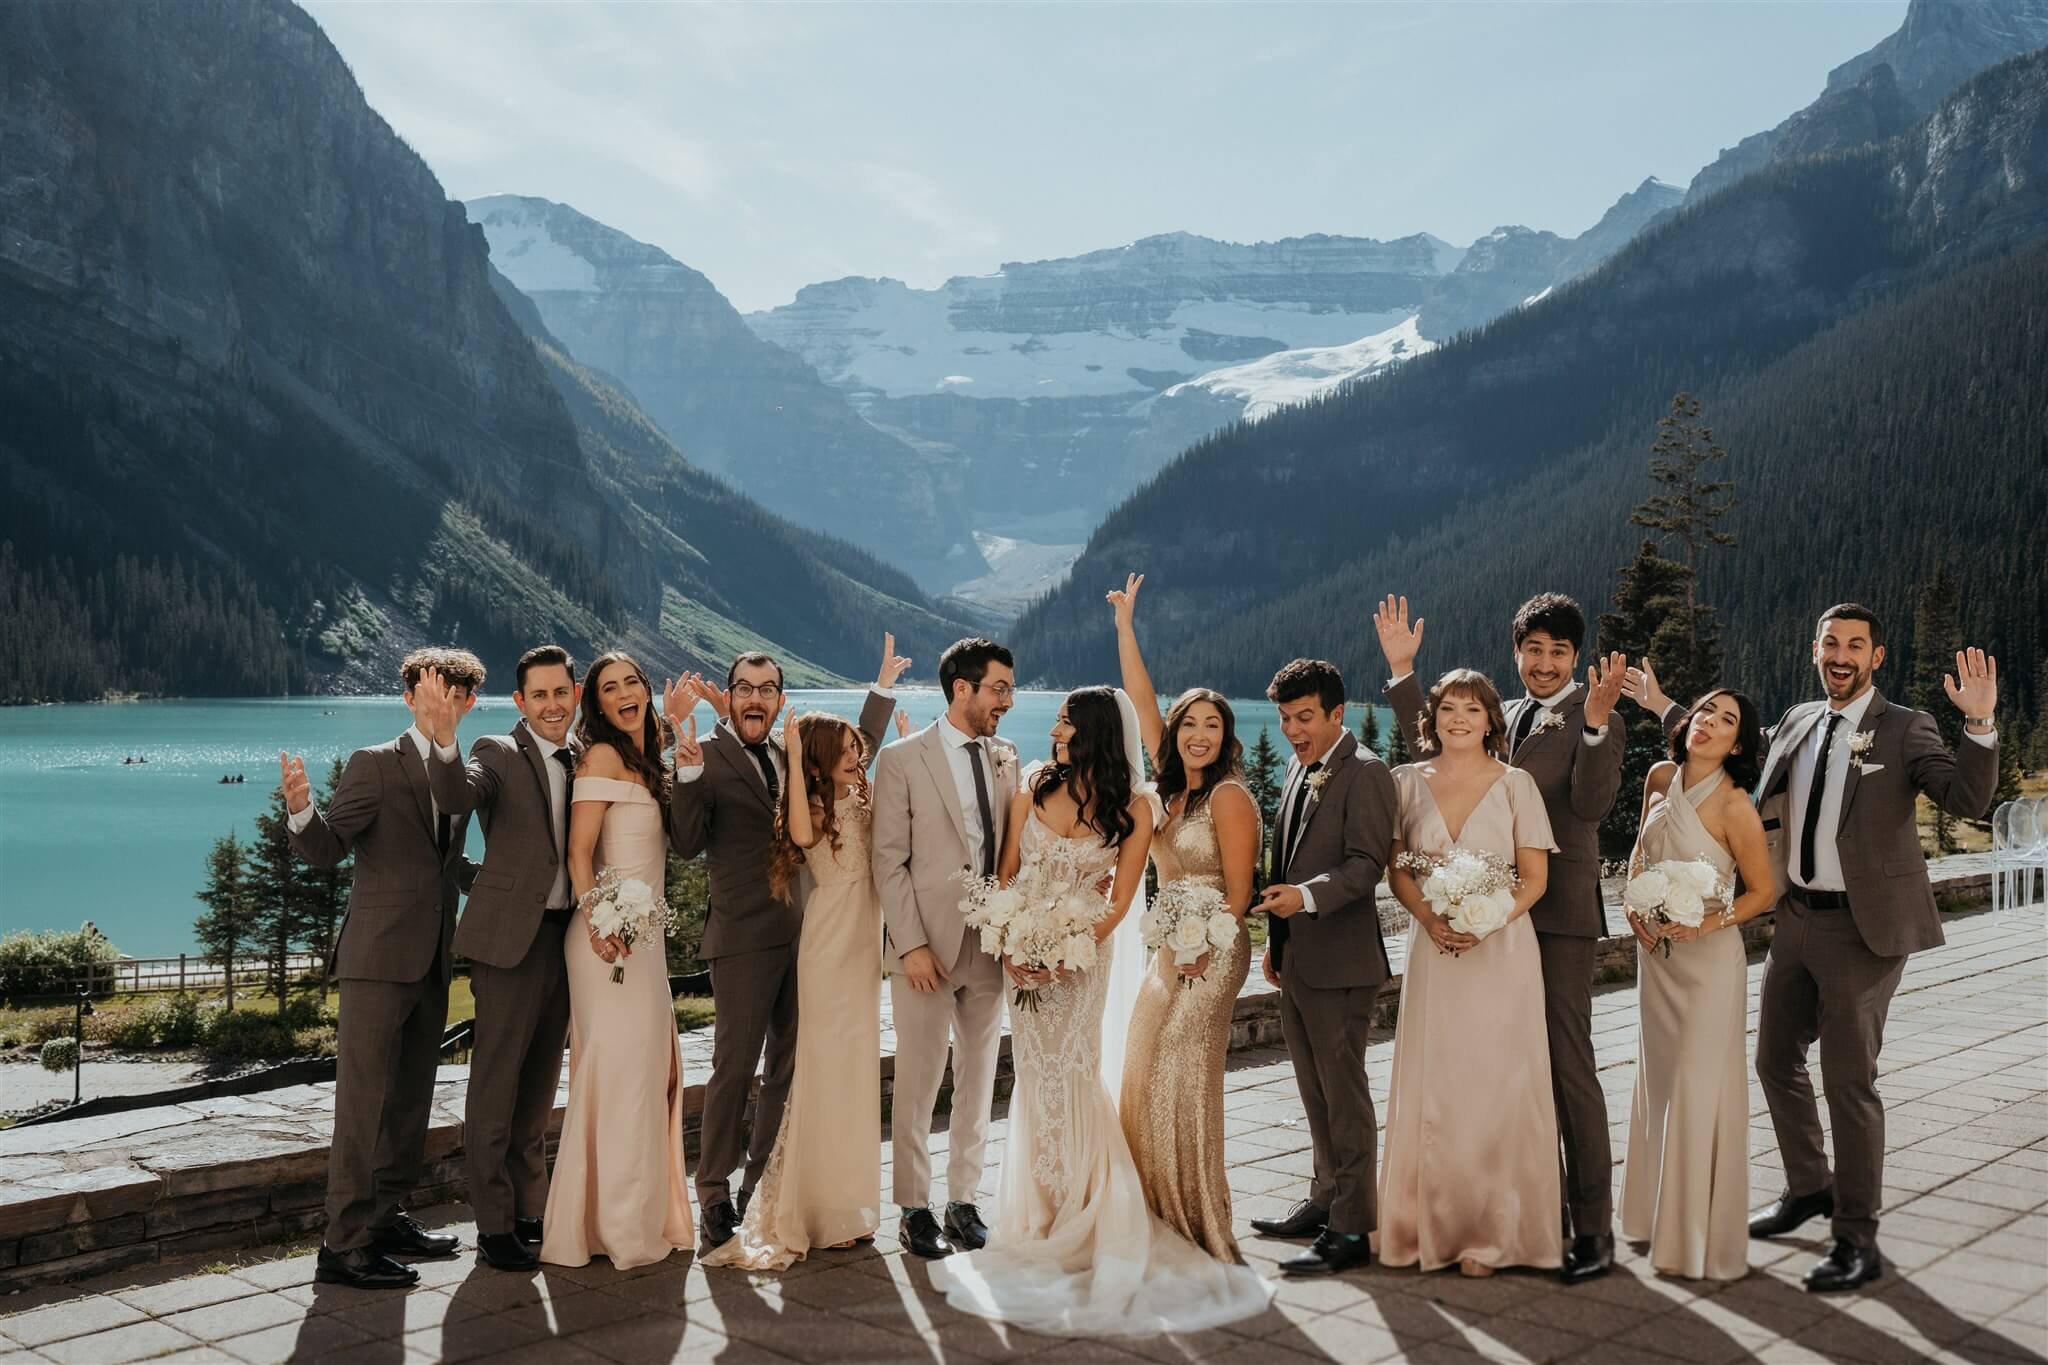 Wedding party cheer at Lake Louise wedding in Alberta Canada